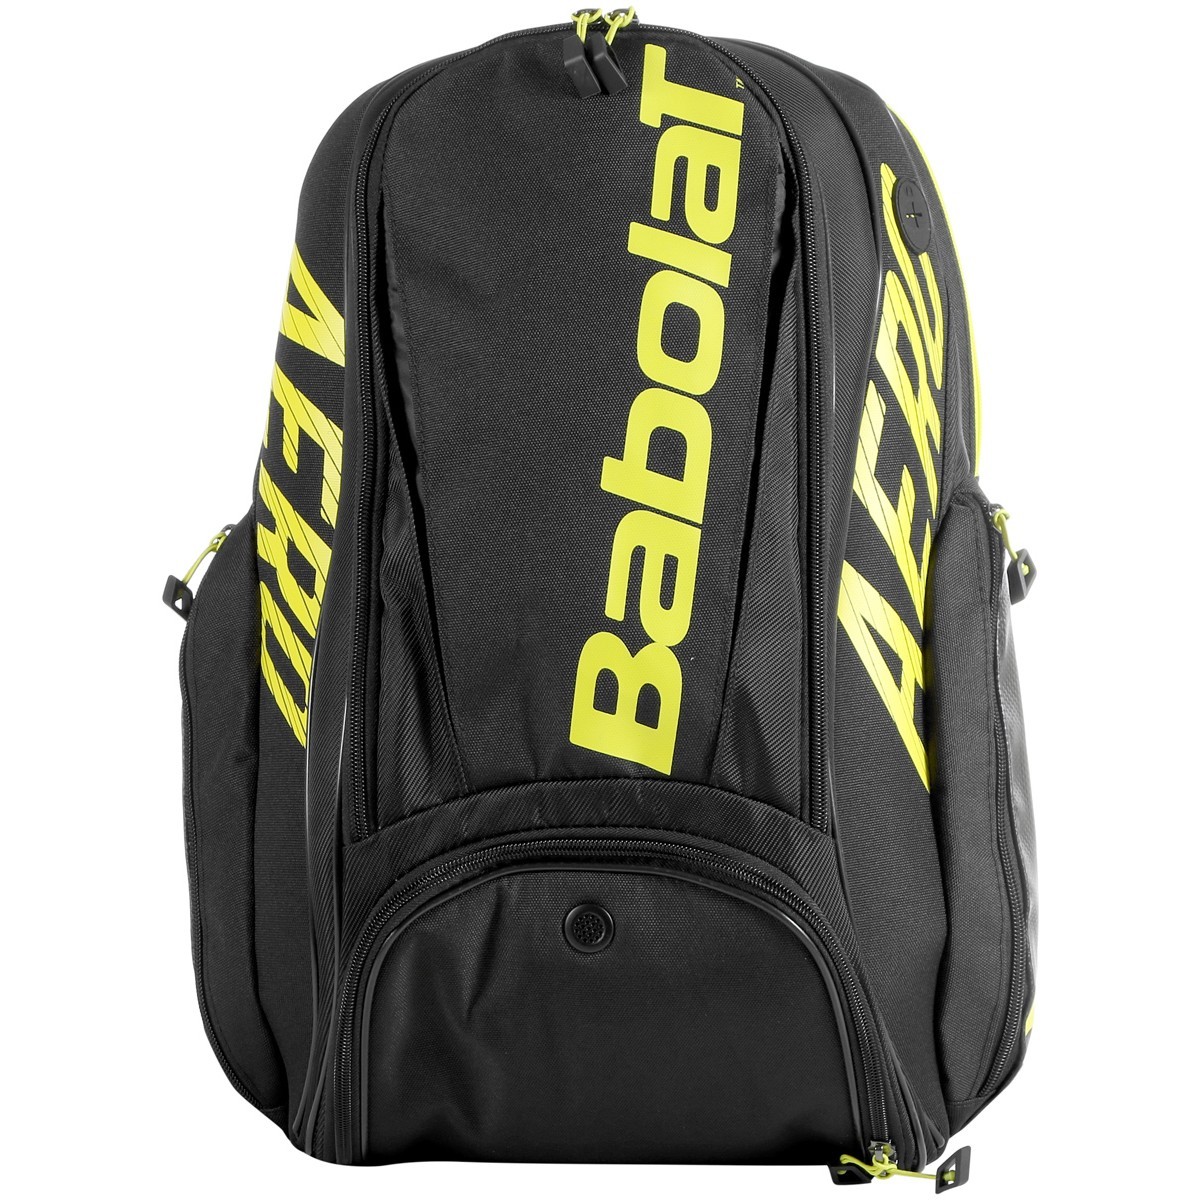 Теннисный рюкзак Babolat Pure Aero Backpack 2021 black/yellow